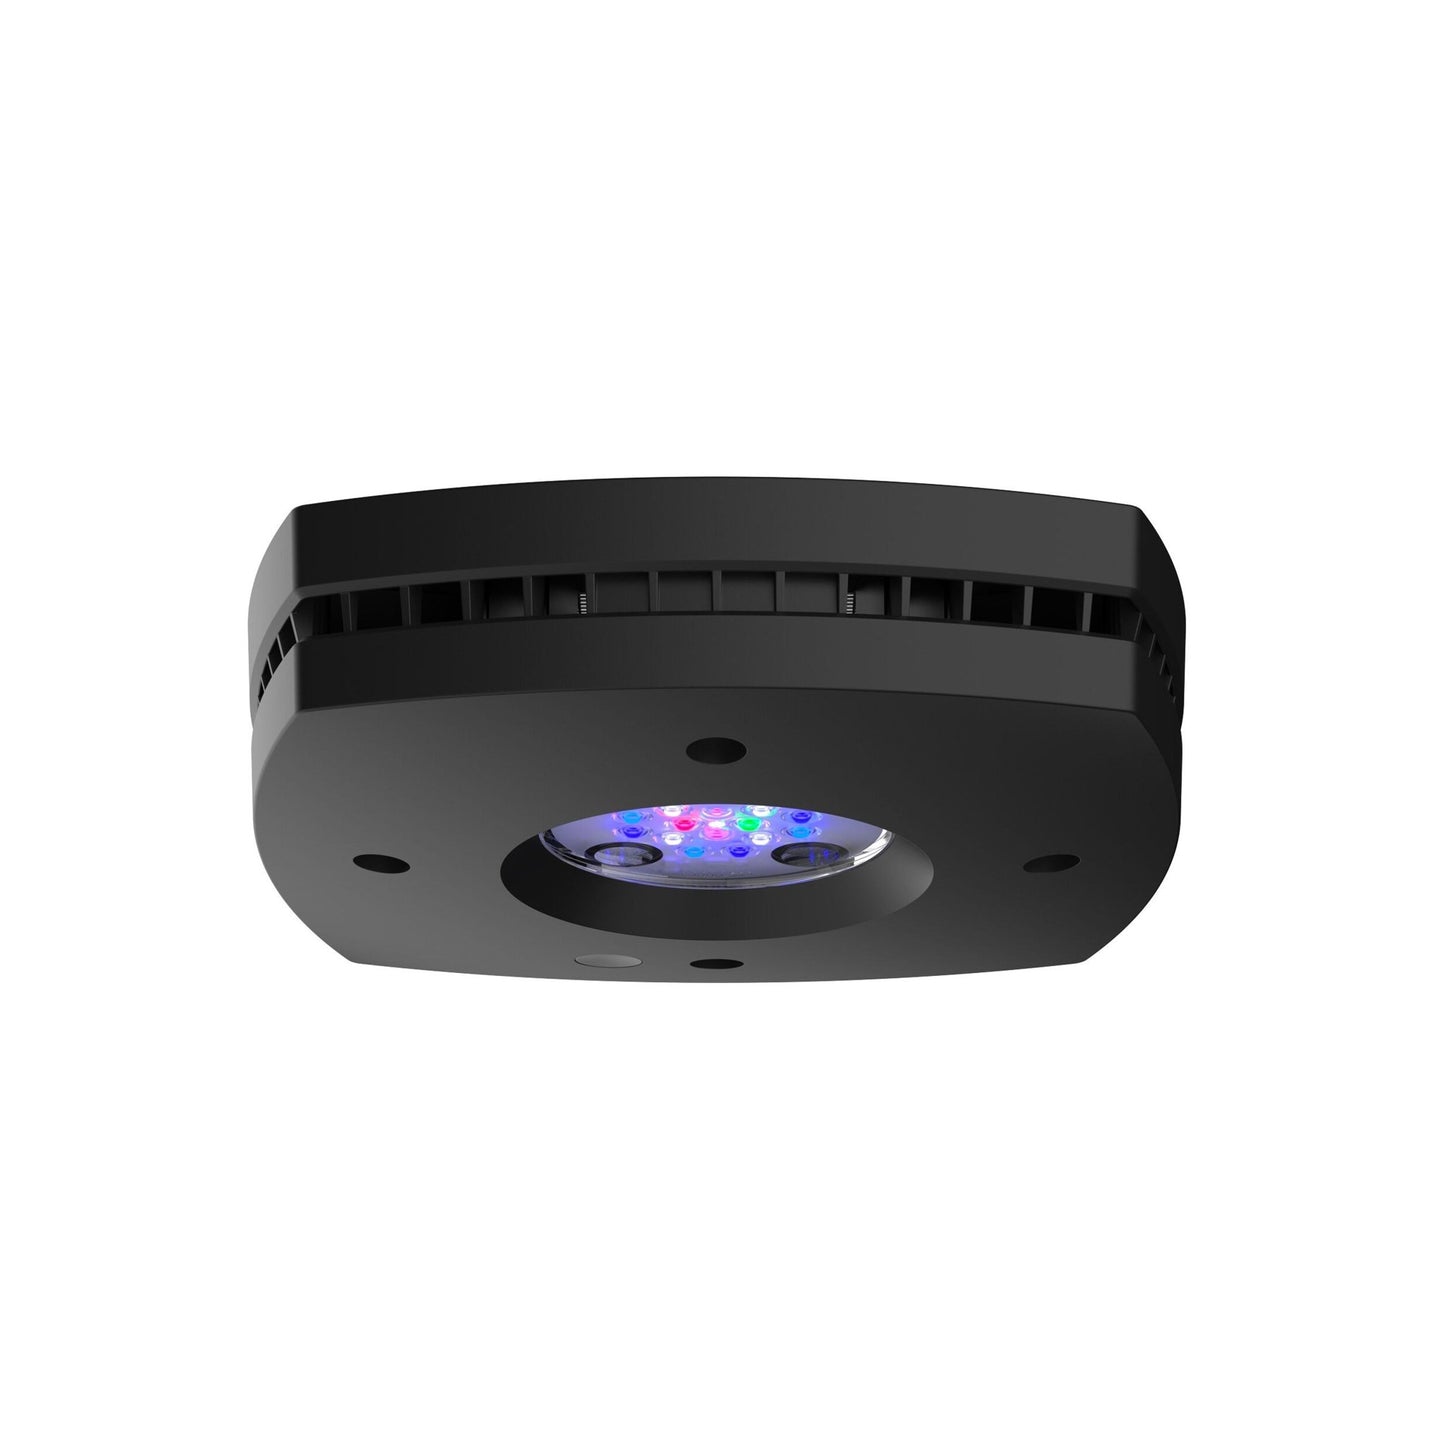 AI Prime 16HD LED Light - Black - Charterhouse Aquatics